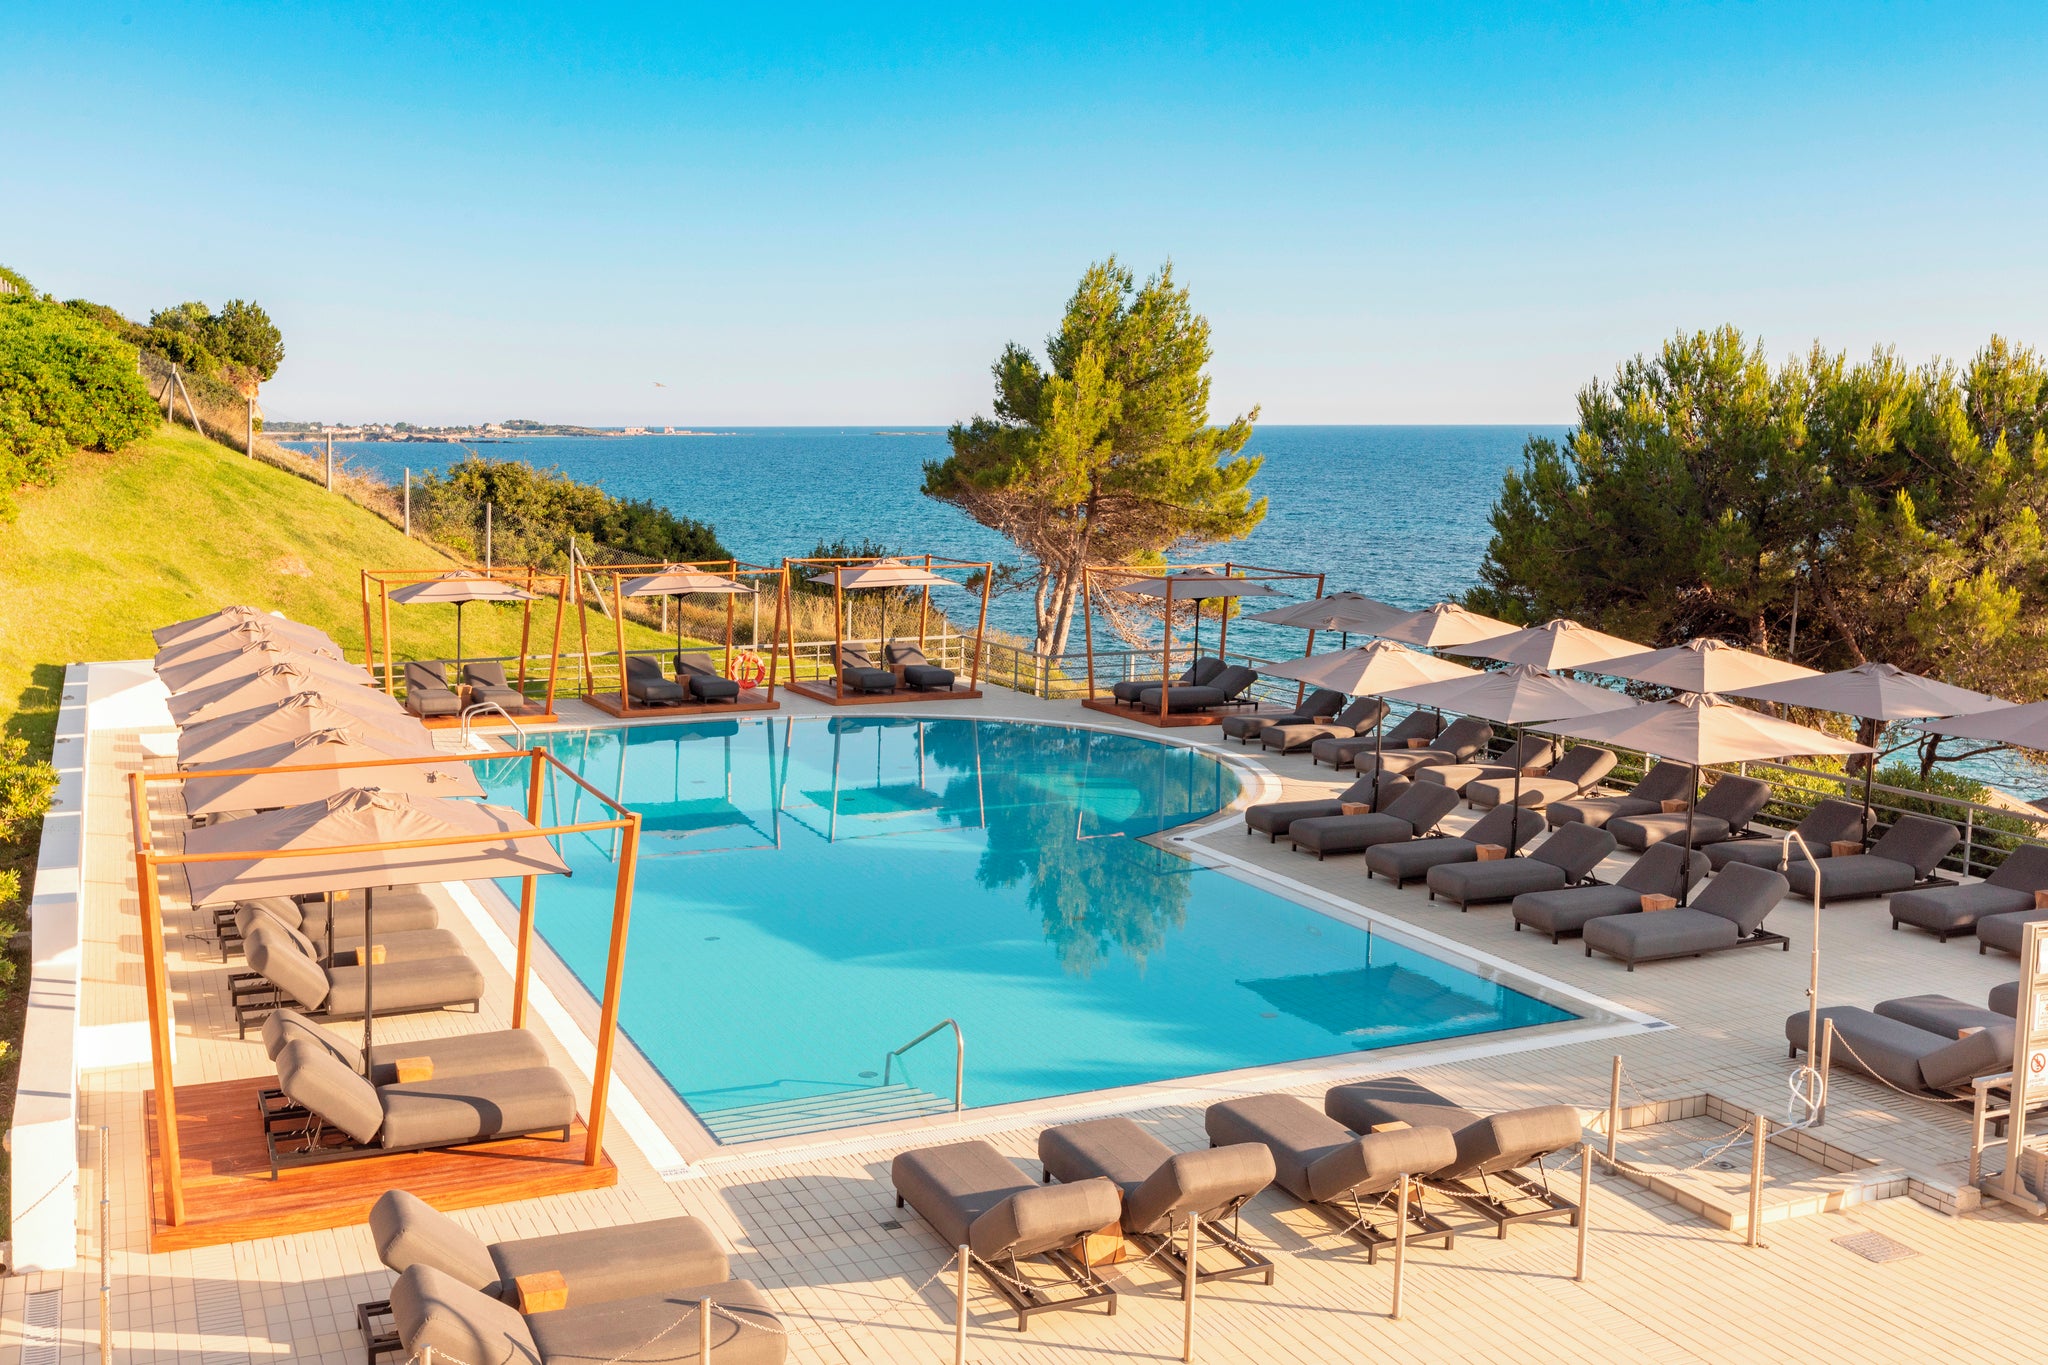 At White Rocks Hotel in Kefalonia, you can enjoy idyllic sea views